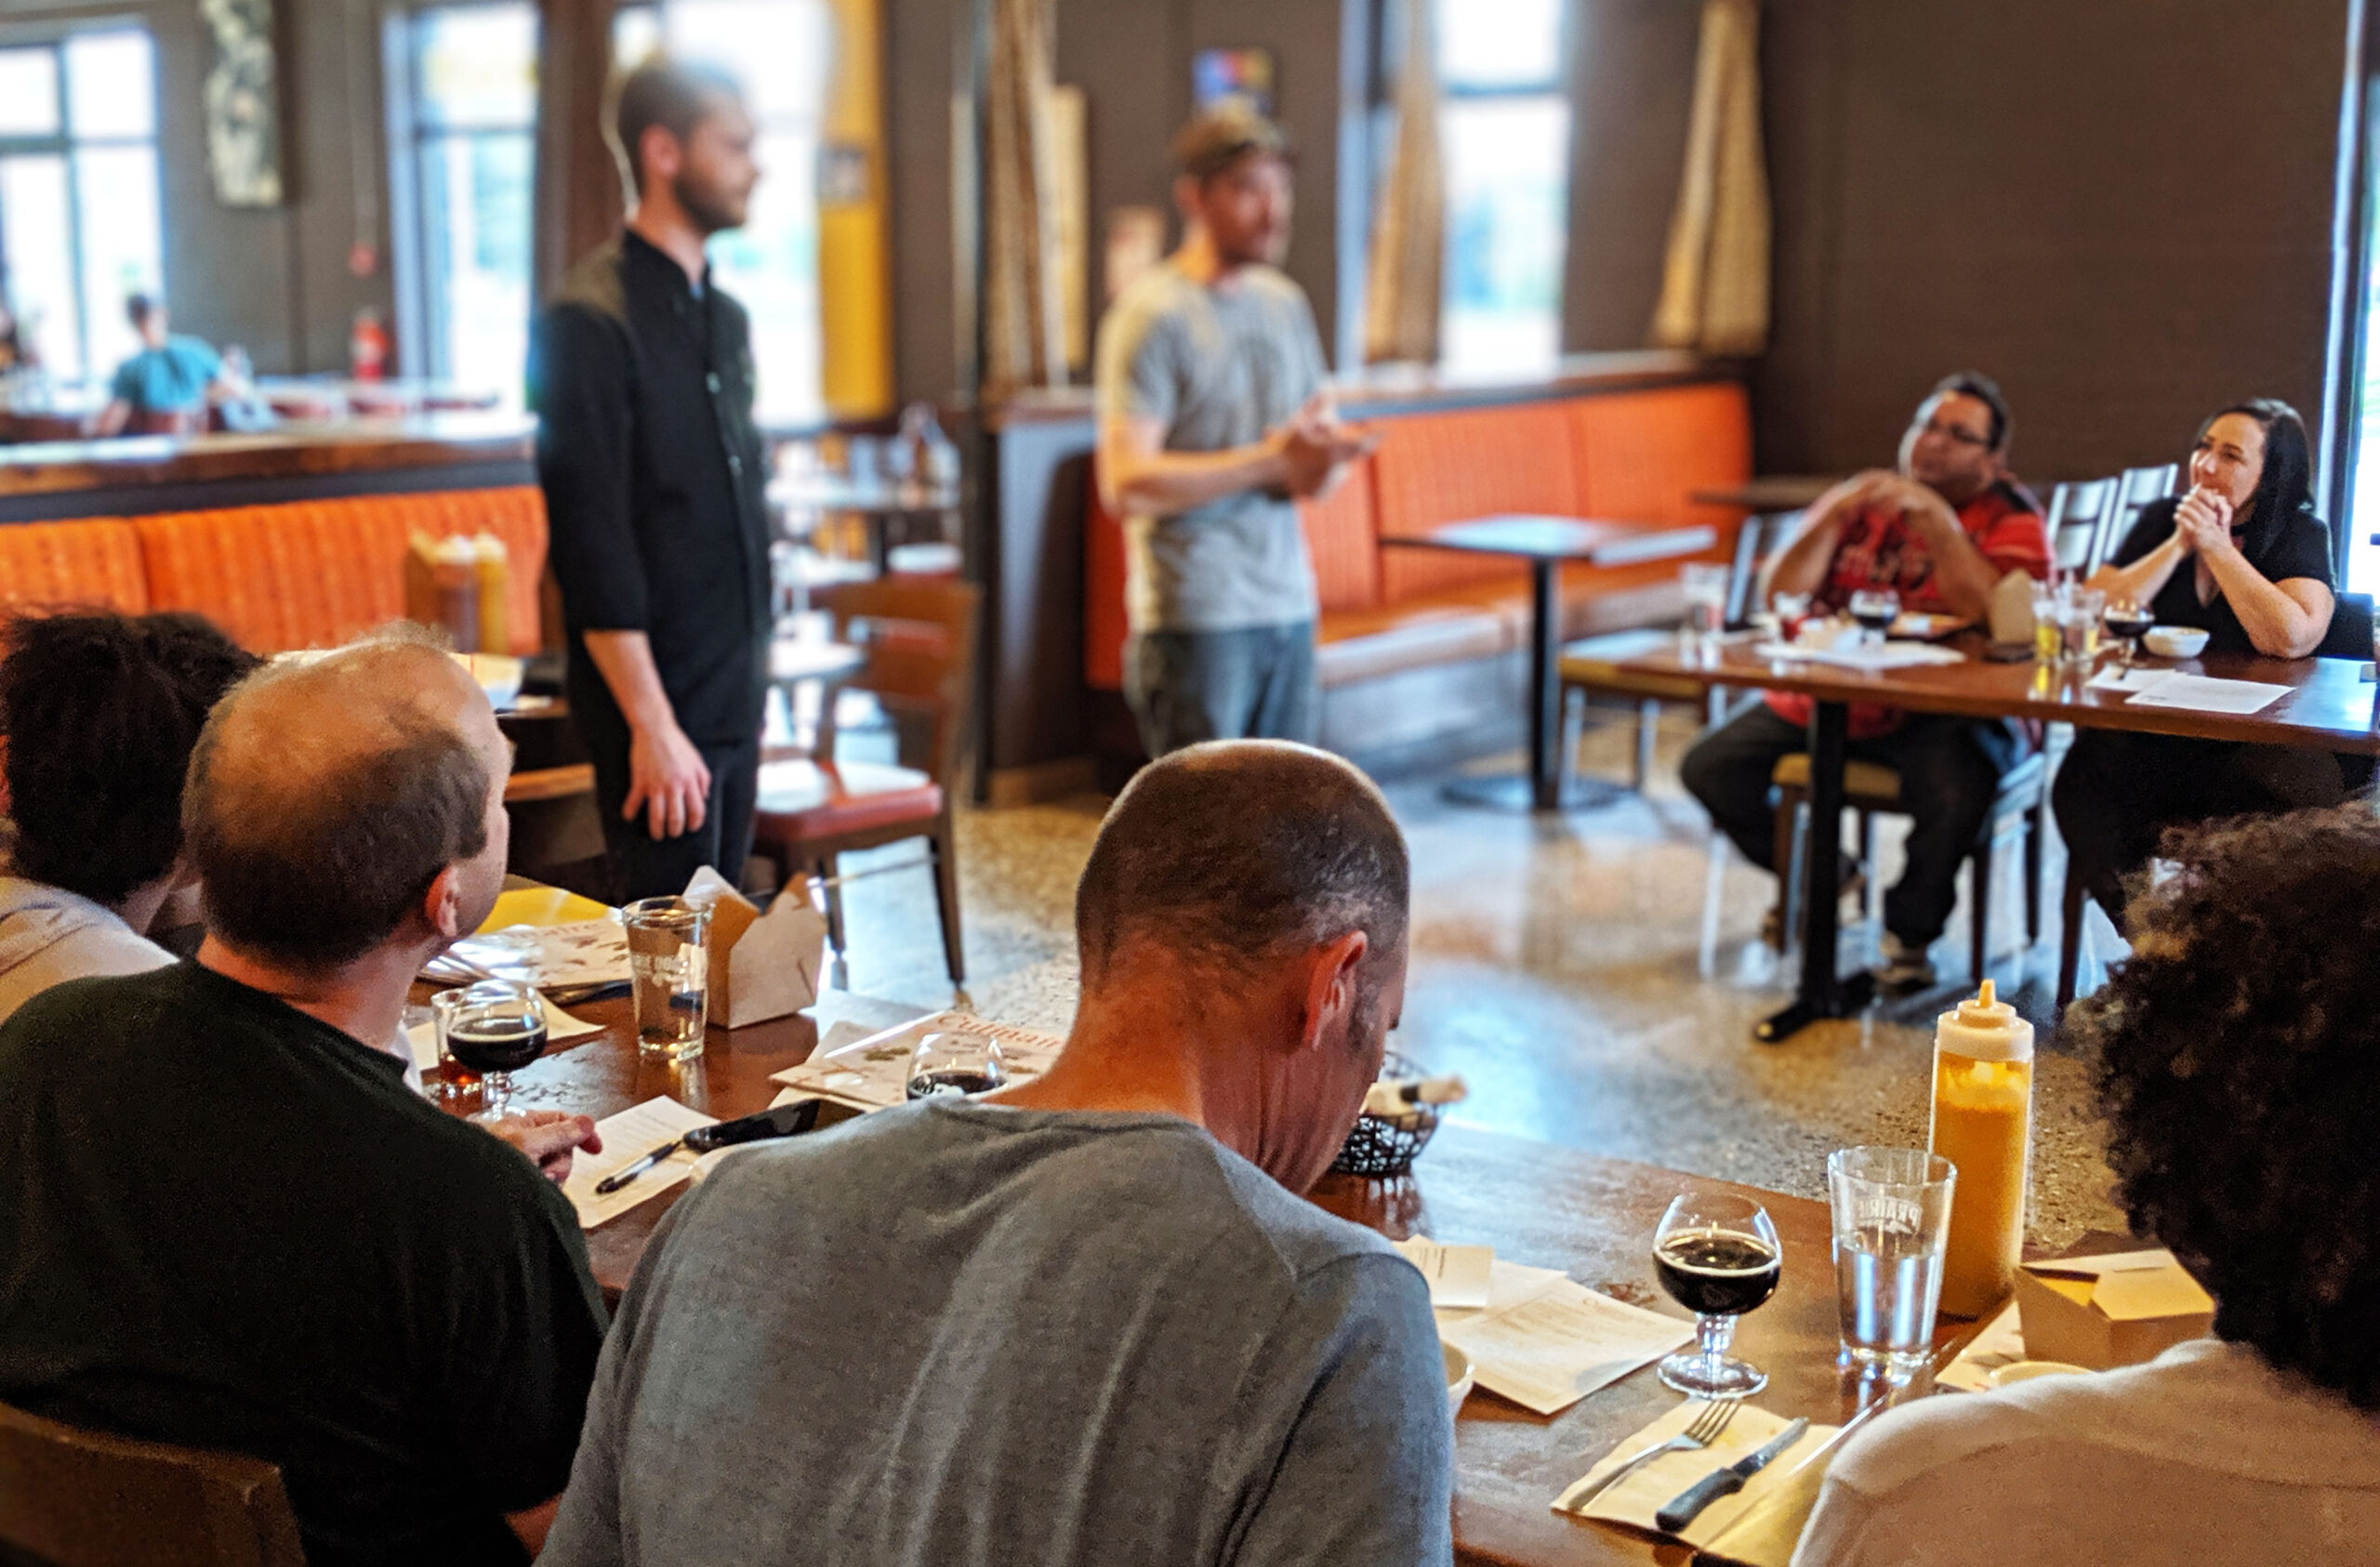 Guests tasting beer while Prairie Dog Brewing's Chef speaks at Barrelpalooza Brewmaster's dinner.